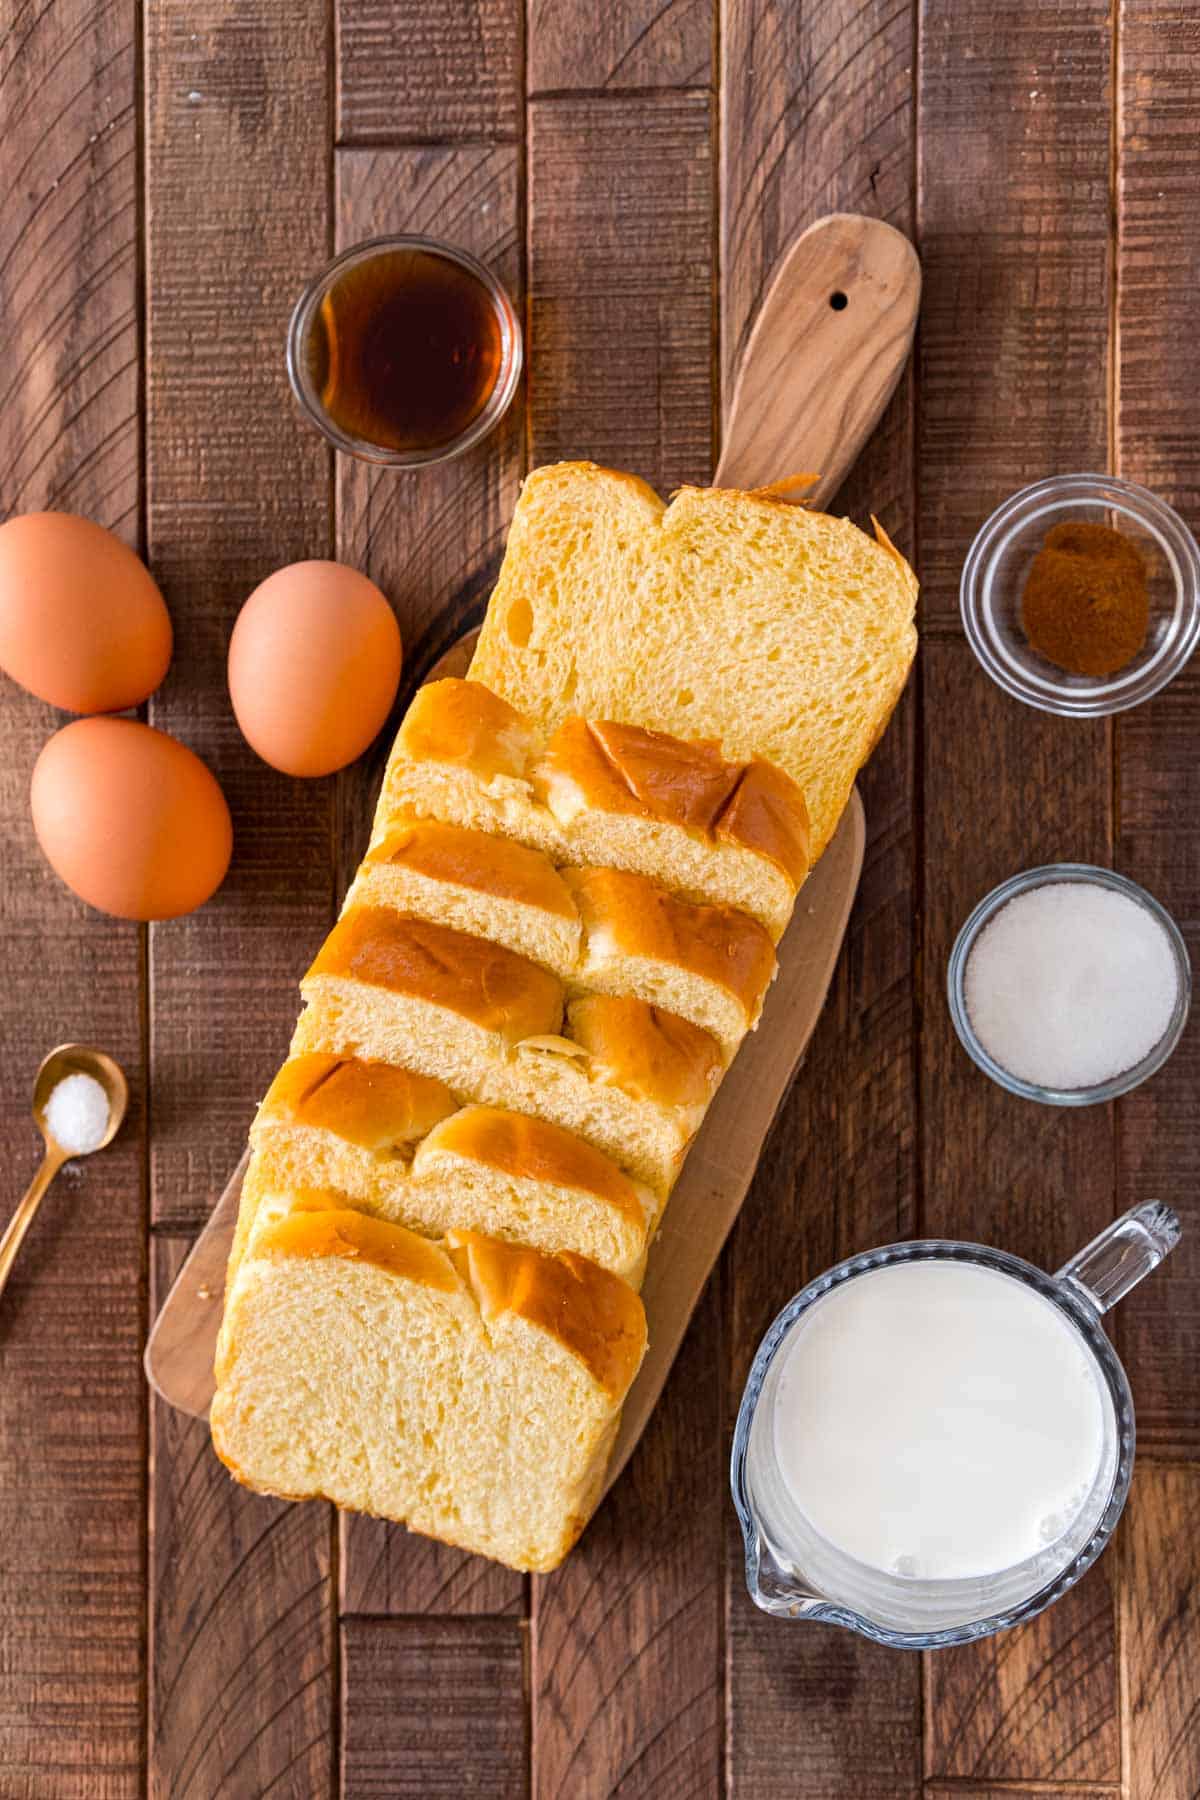 Ingredients needed: brioche bread, eggs, egg yolk, half & half, granulated sugar, vanilla extract, cinnamon and salt.